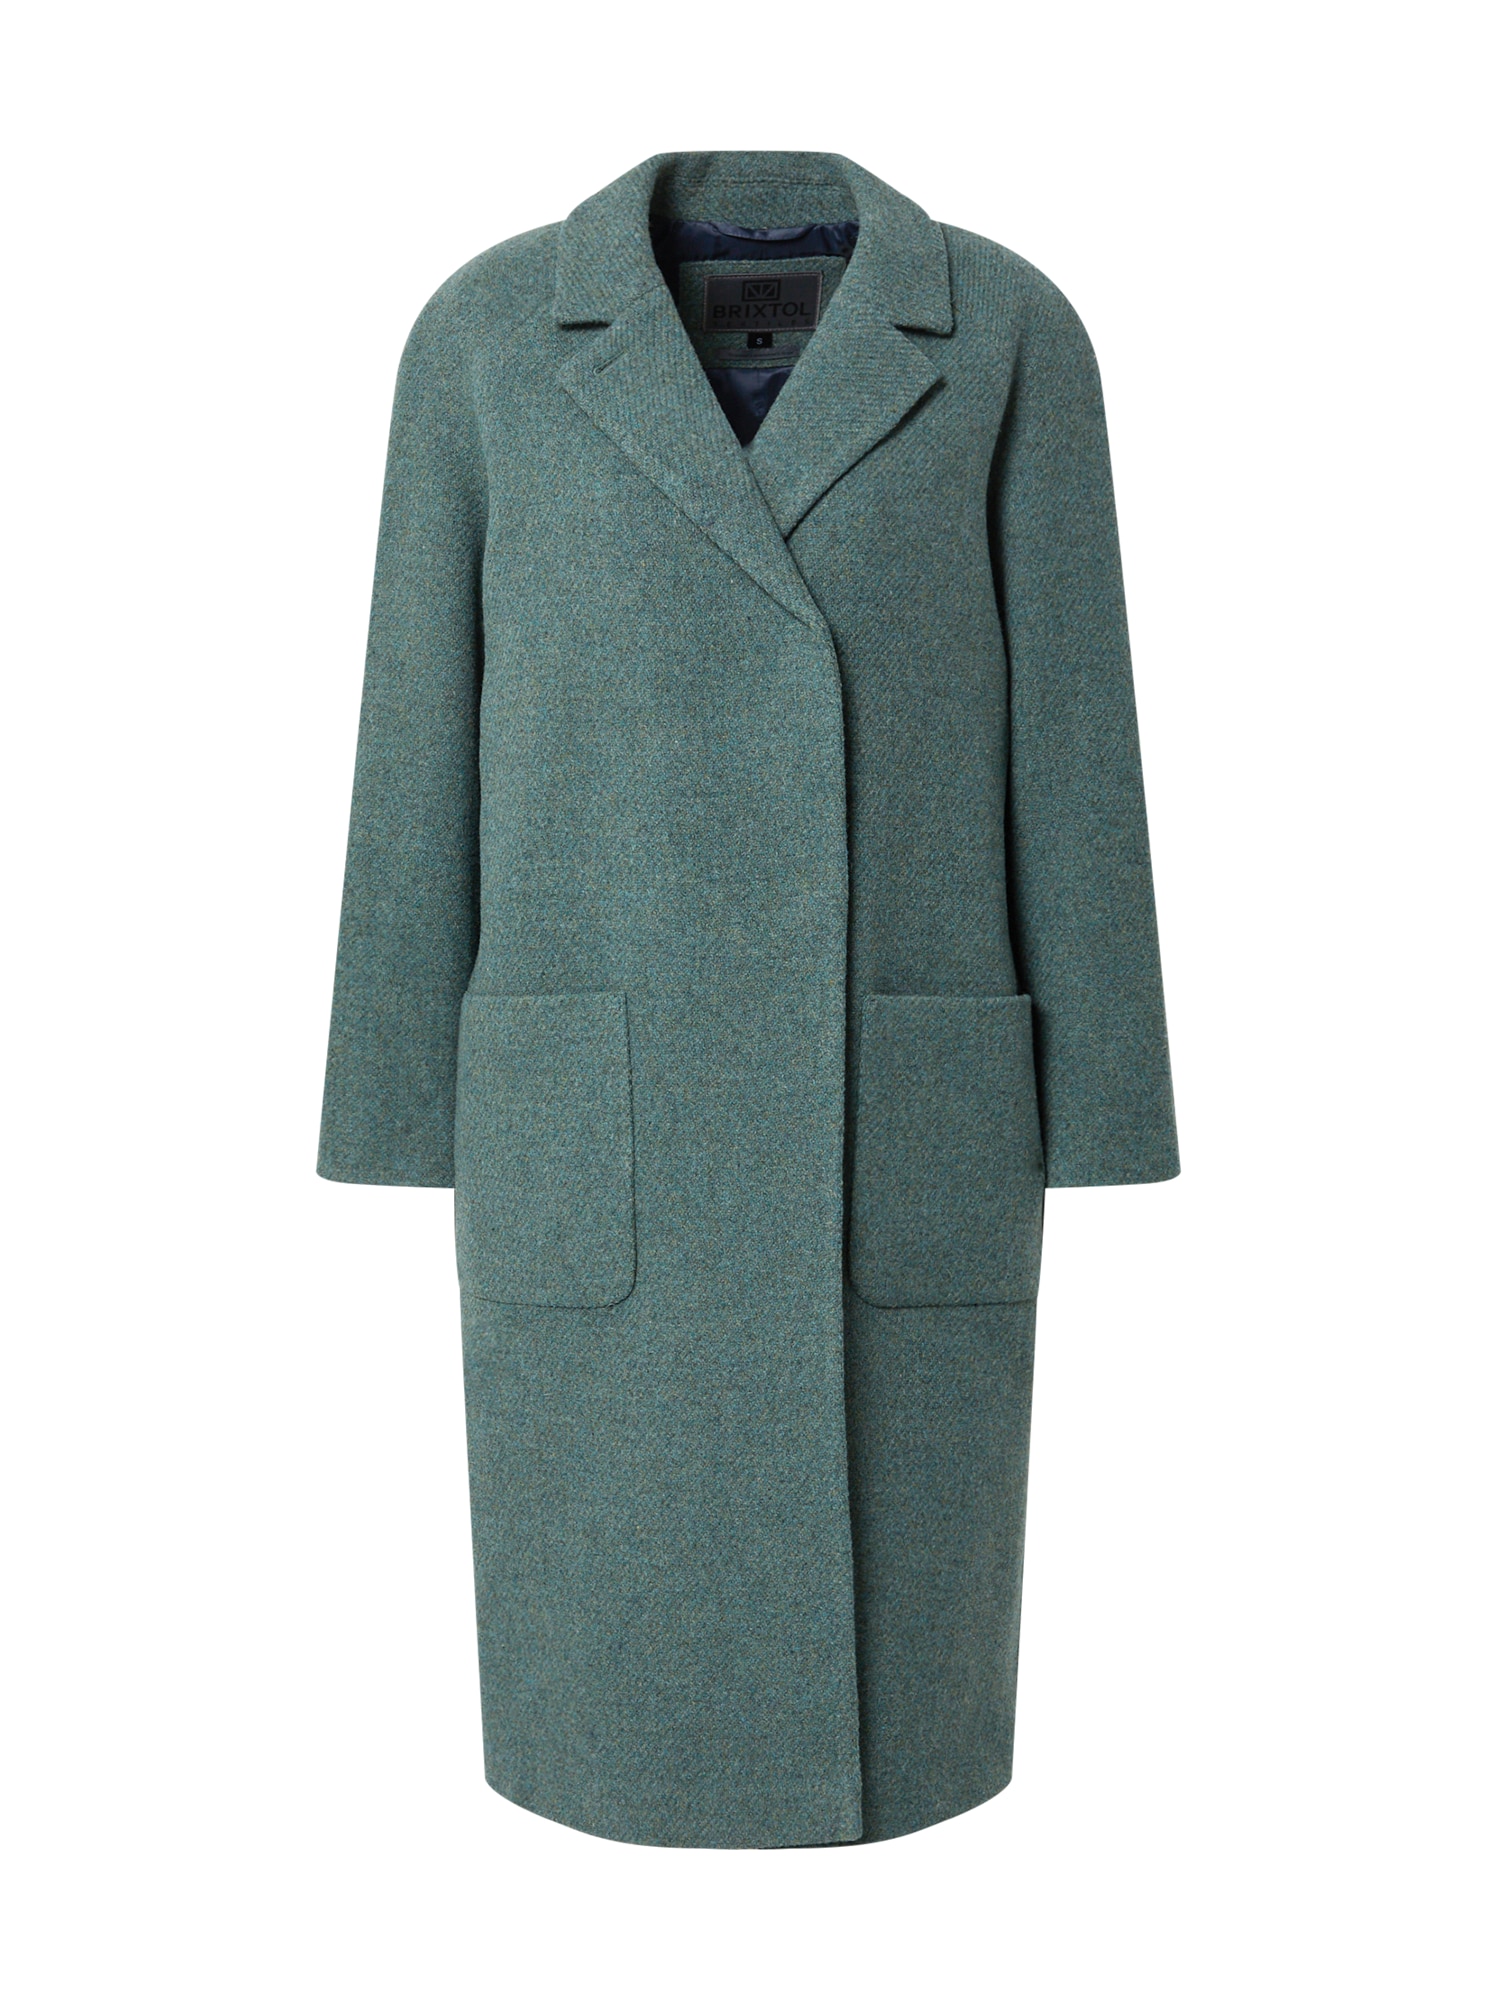 Brixtol Textiles Demisezoninis paltas 'Deb' smaragdinė spalva